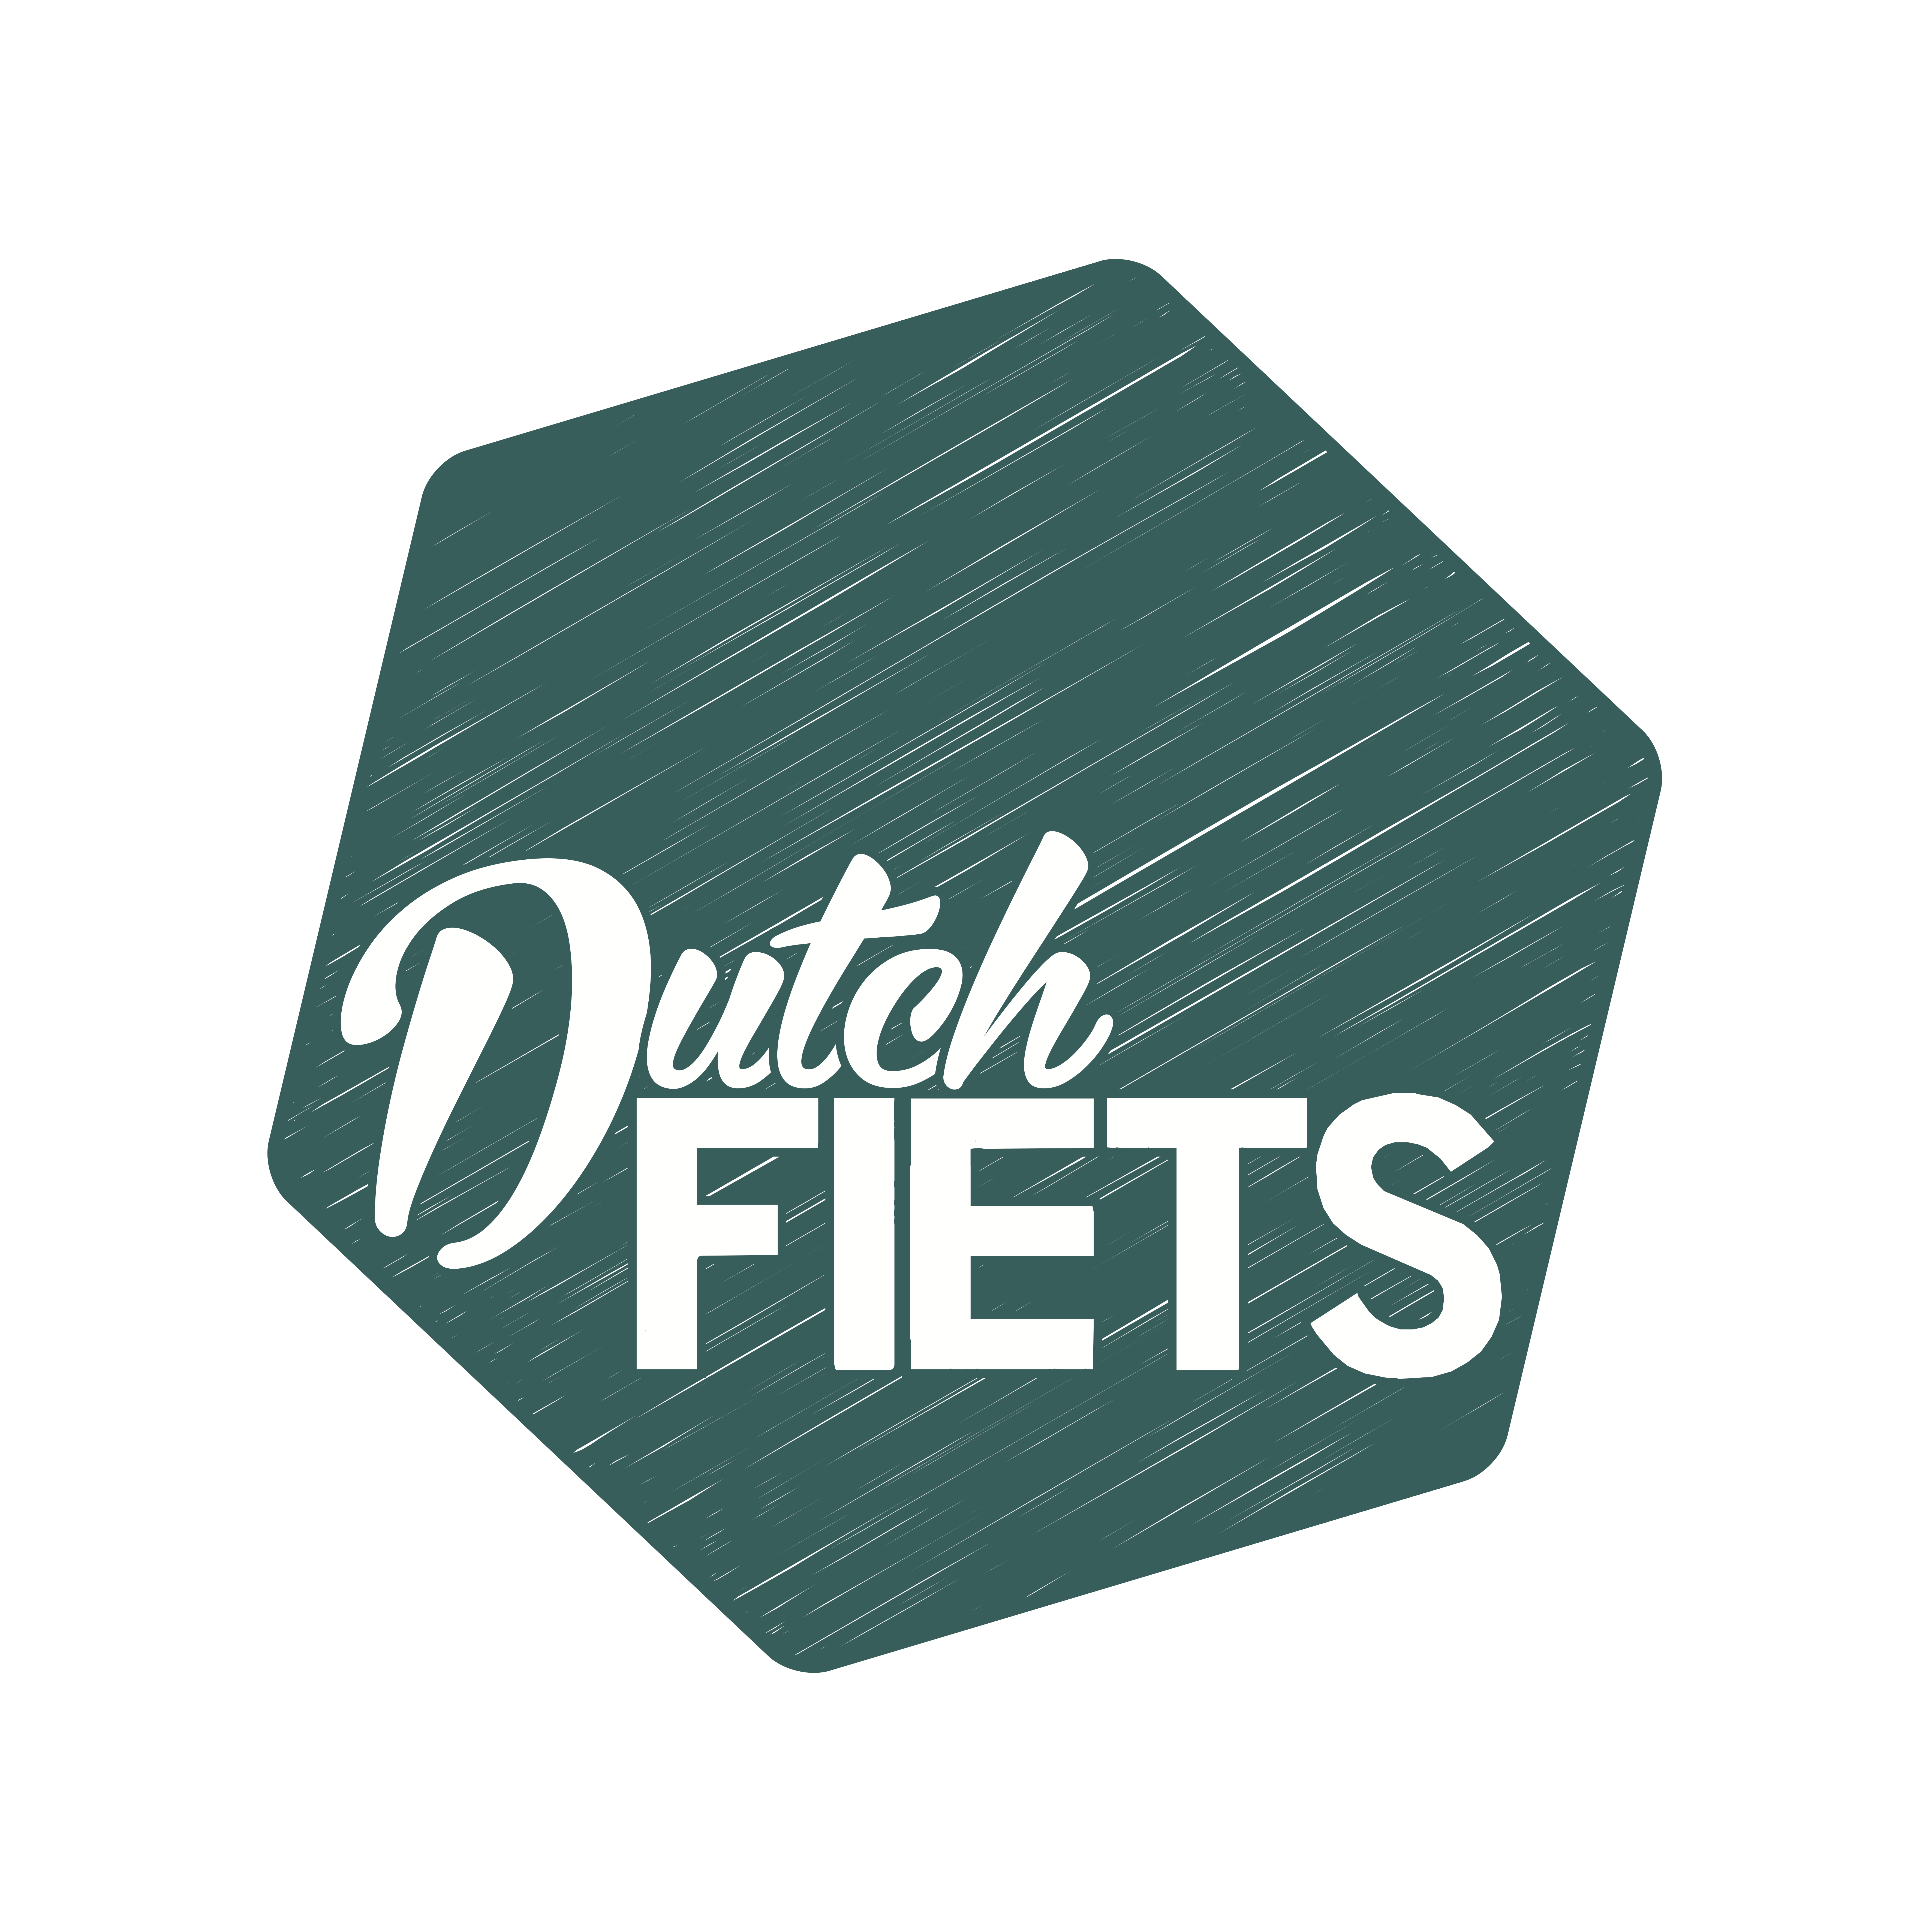 Dutch fiets